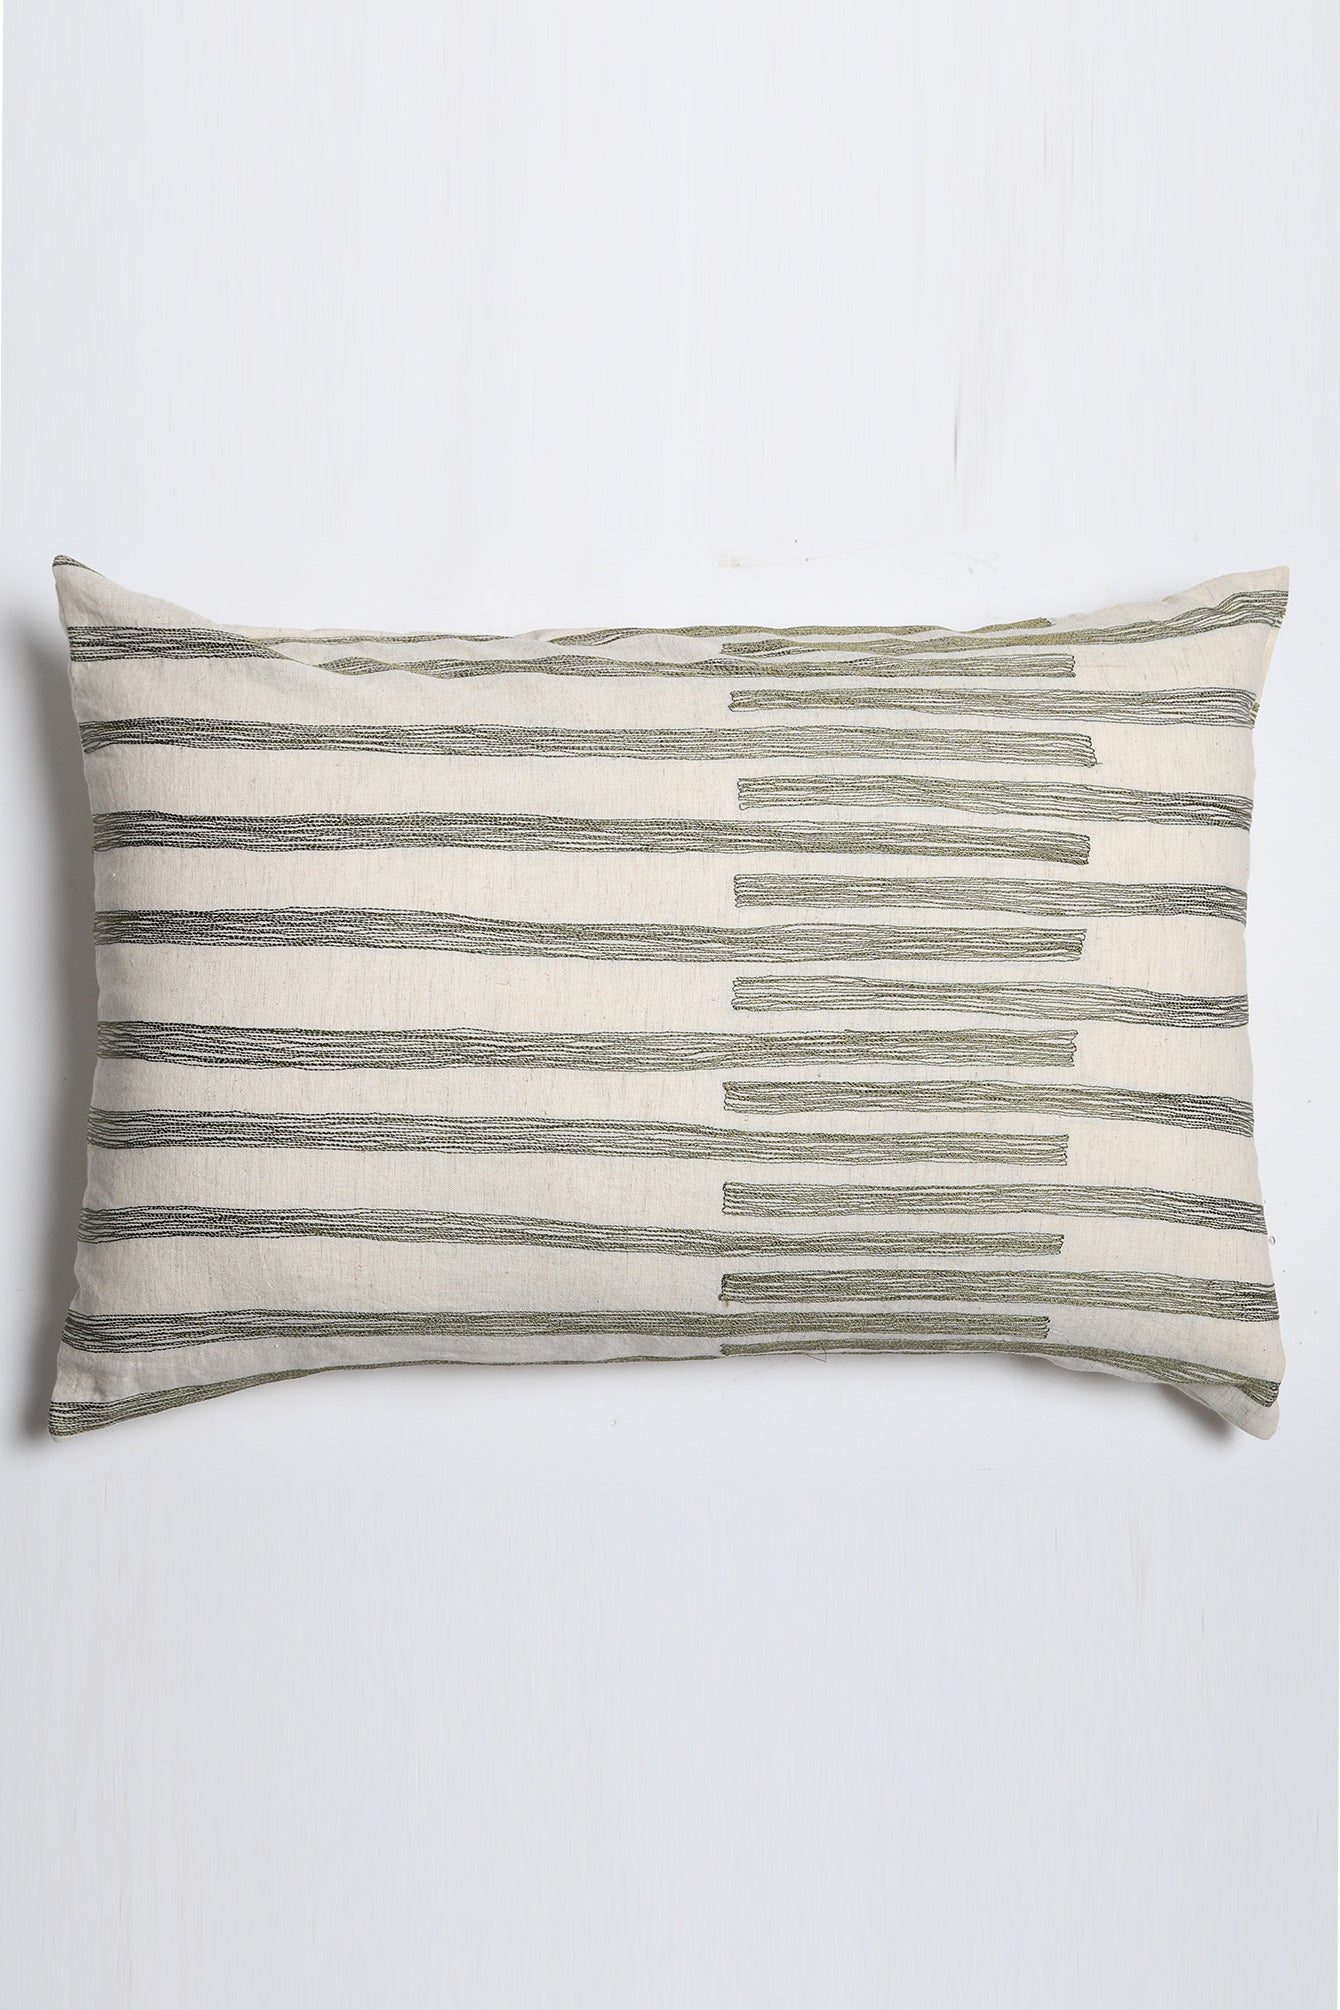 Vratsa Crewel Embroidered Pillow